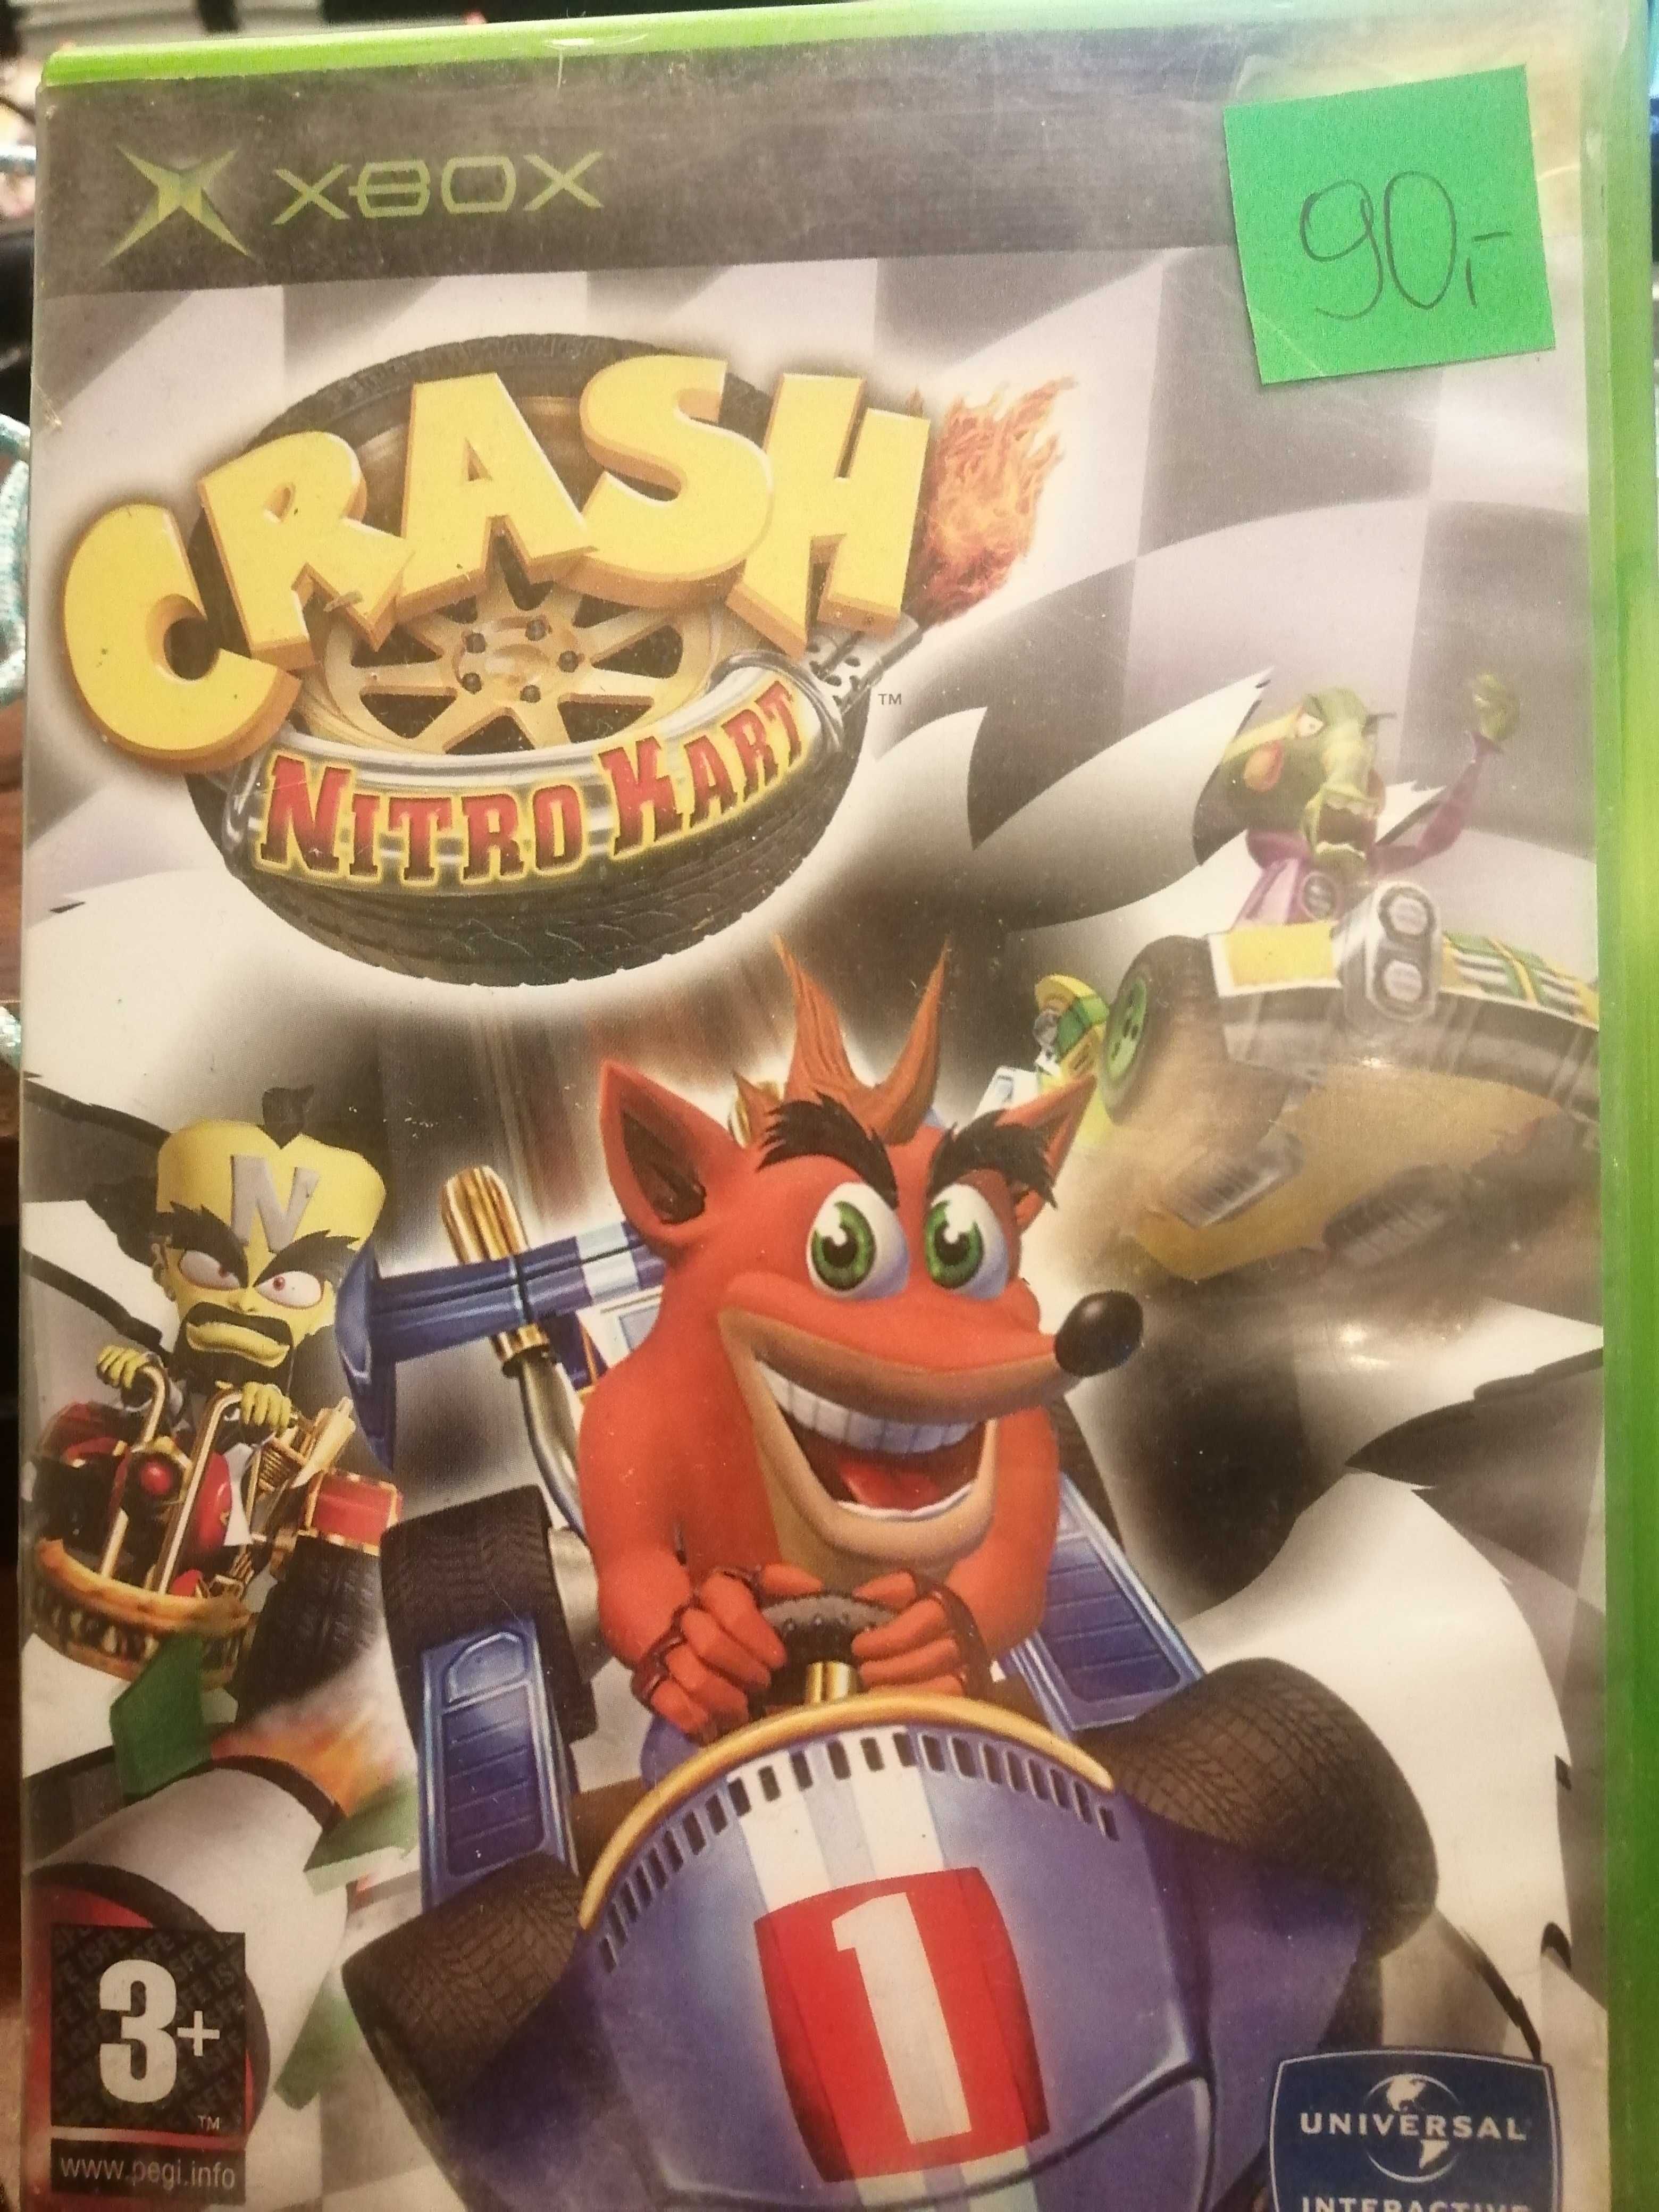 Gra Xbox kladyczny Crash